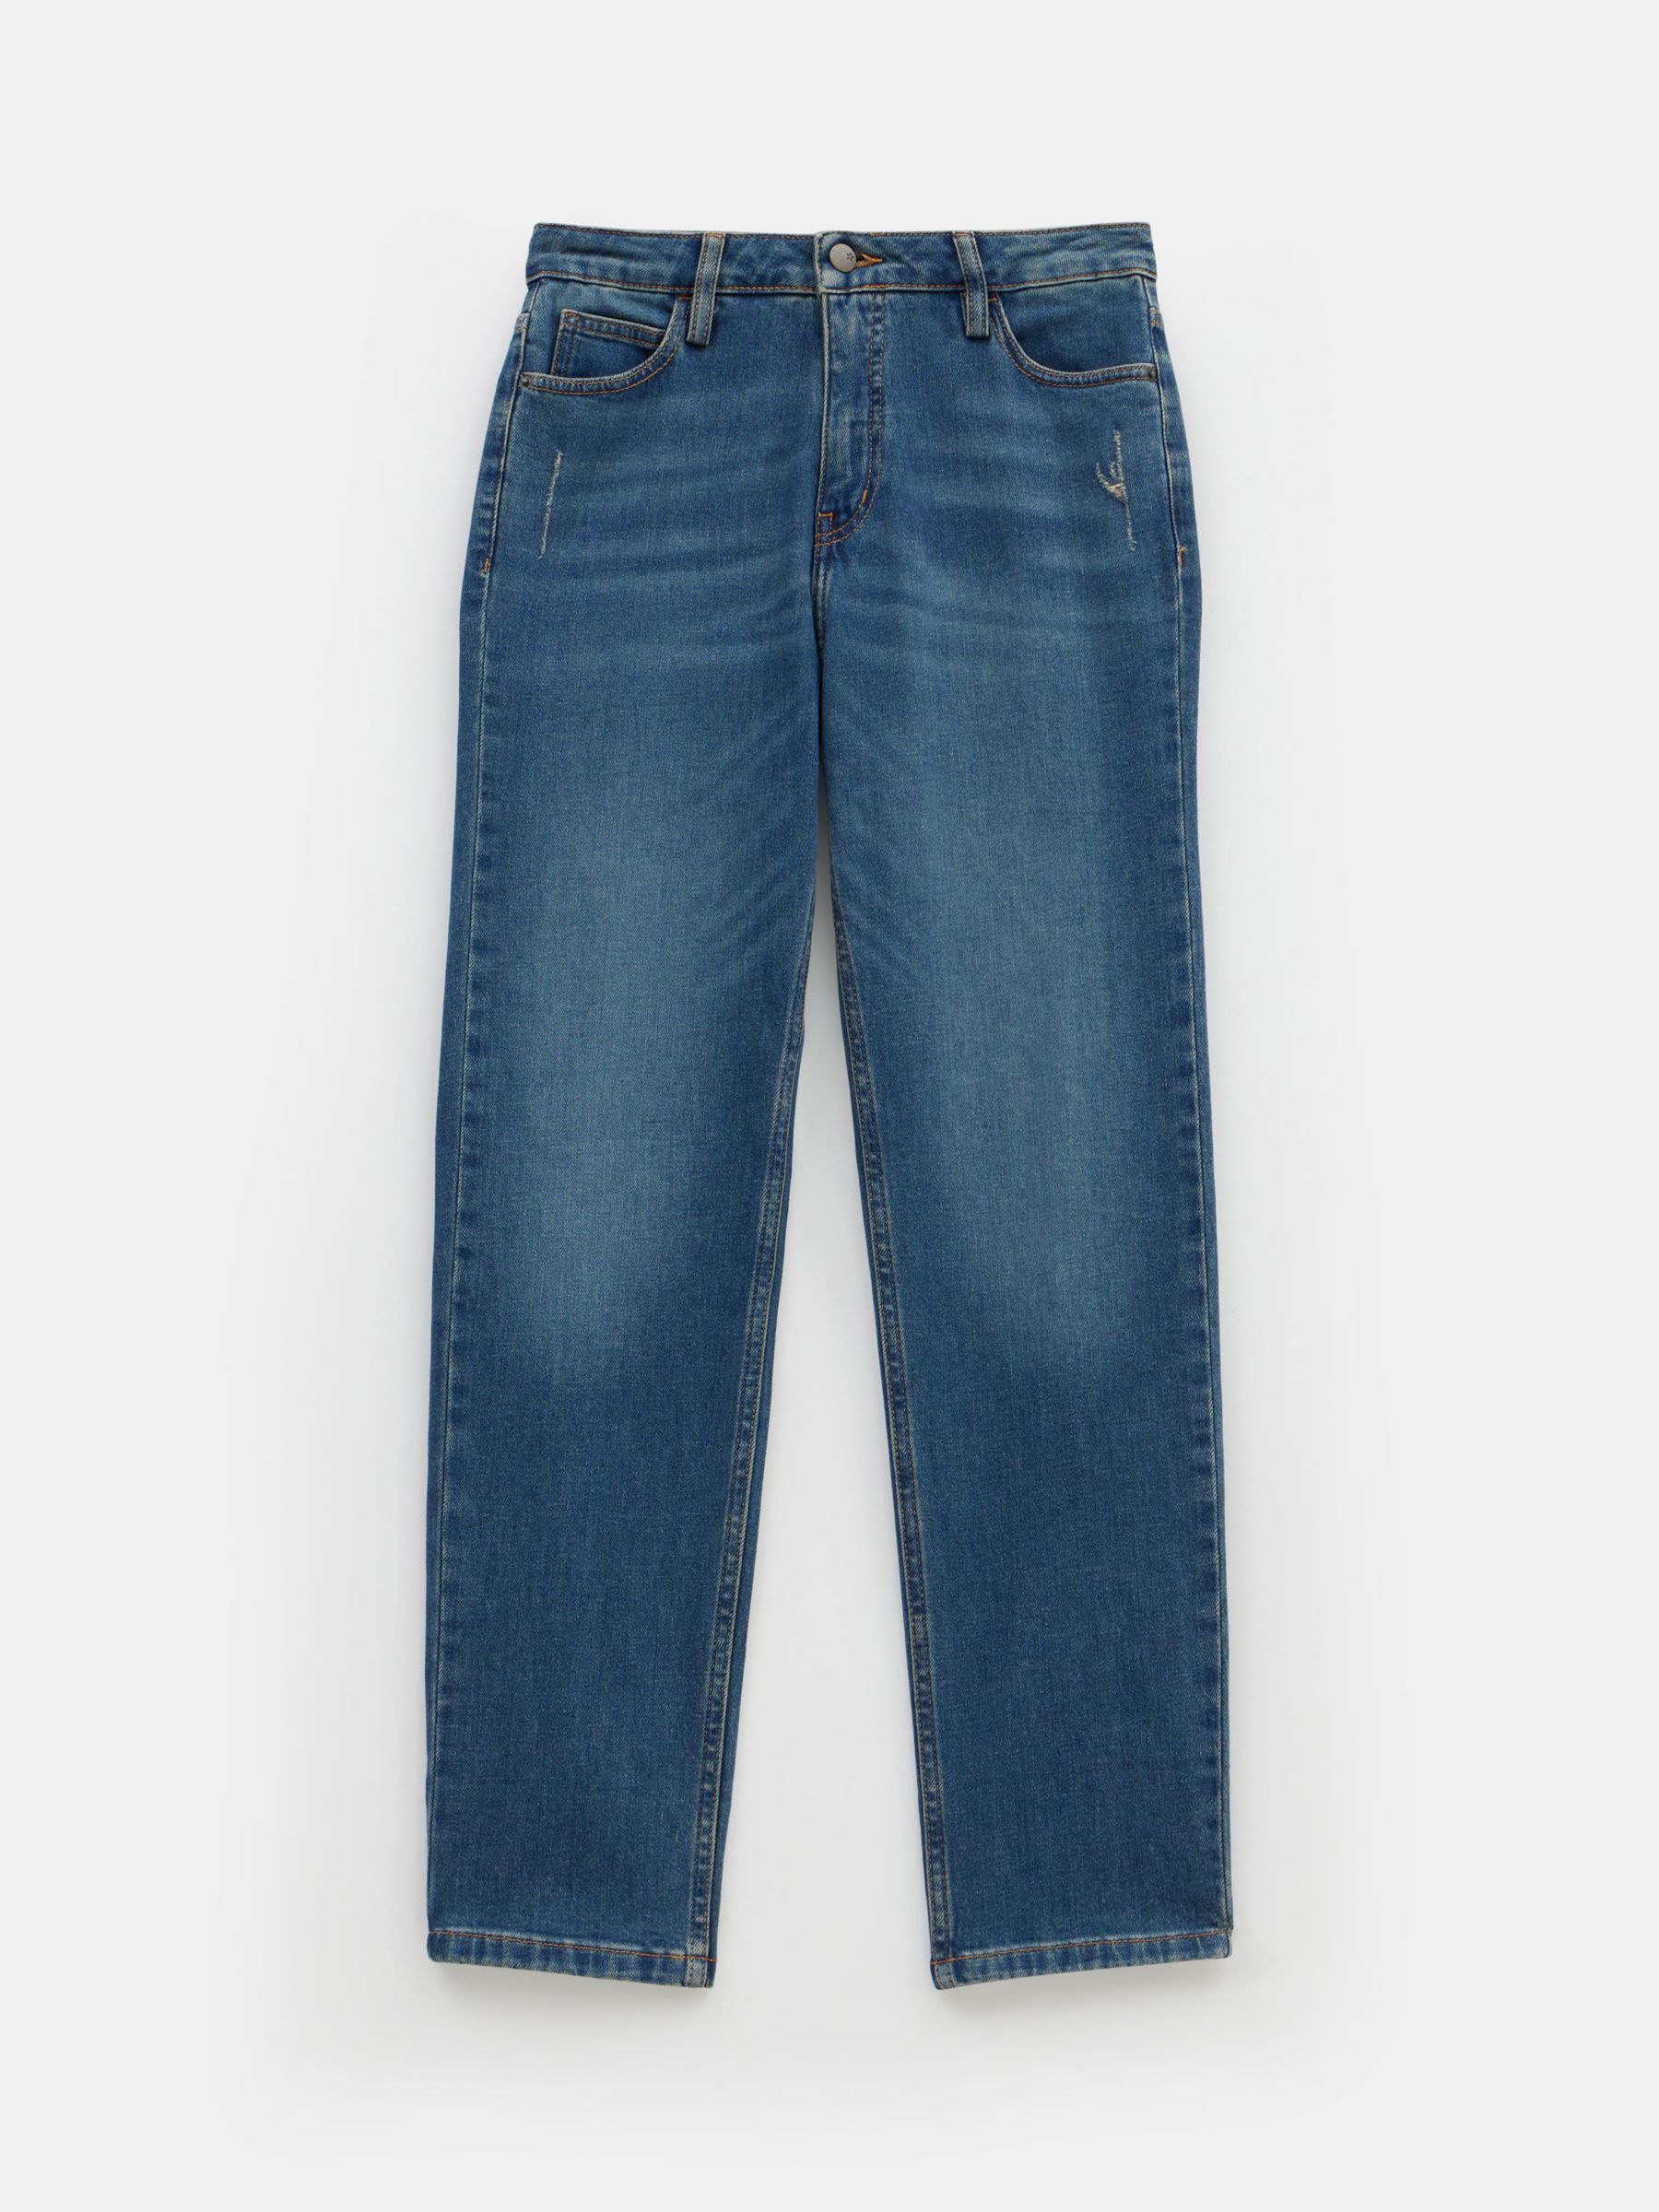 HUSH Agnes Ankle Grazer Jeans, Vintage Wash Blue, 14R